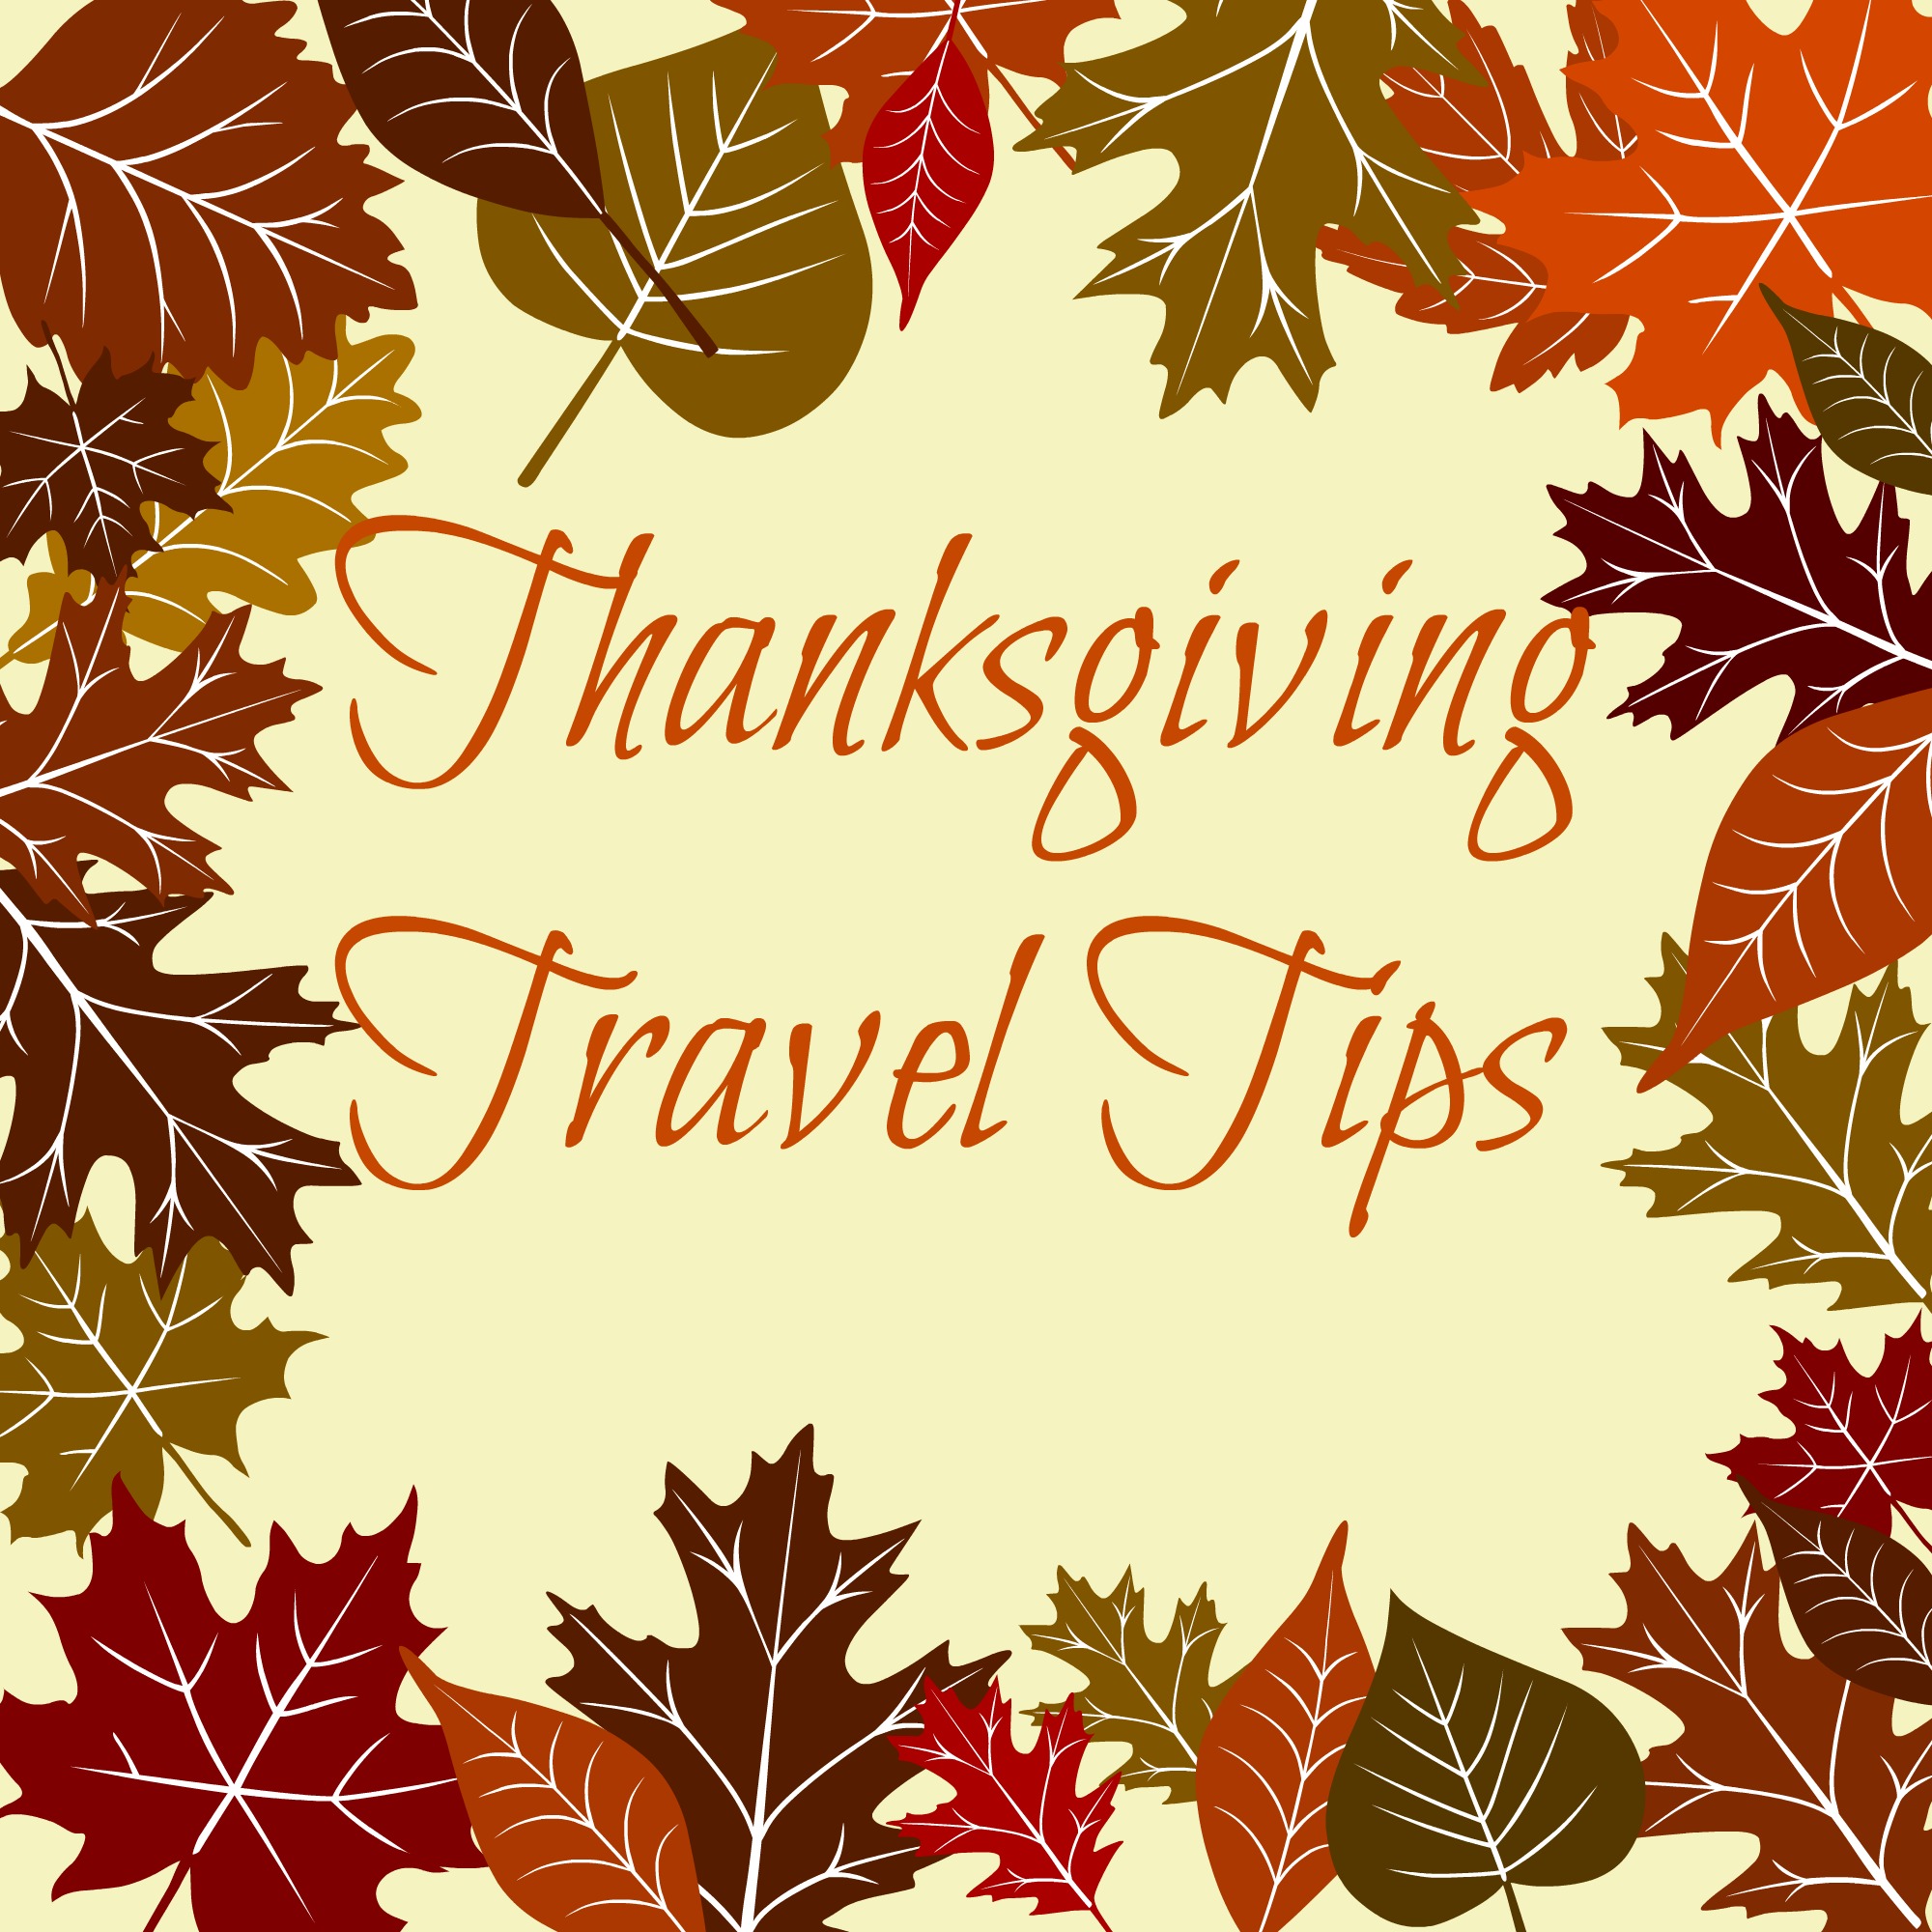 11-16-thanksgiving-travel-tips